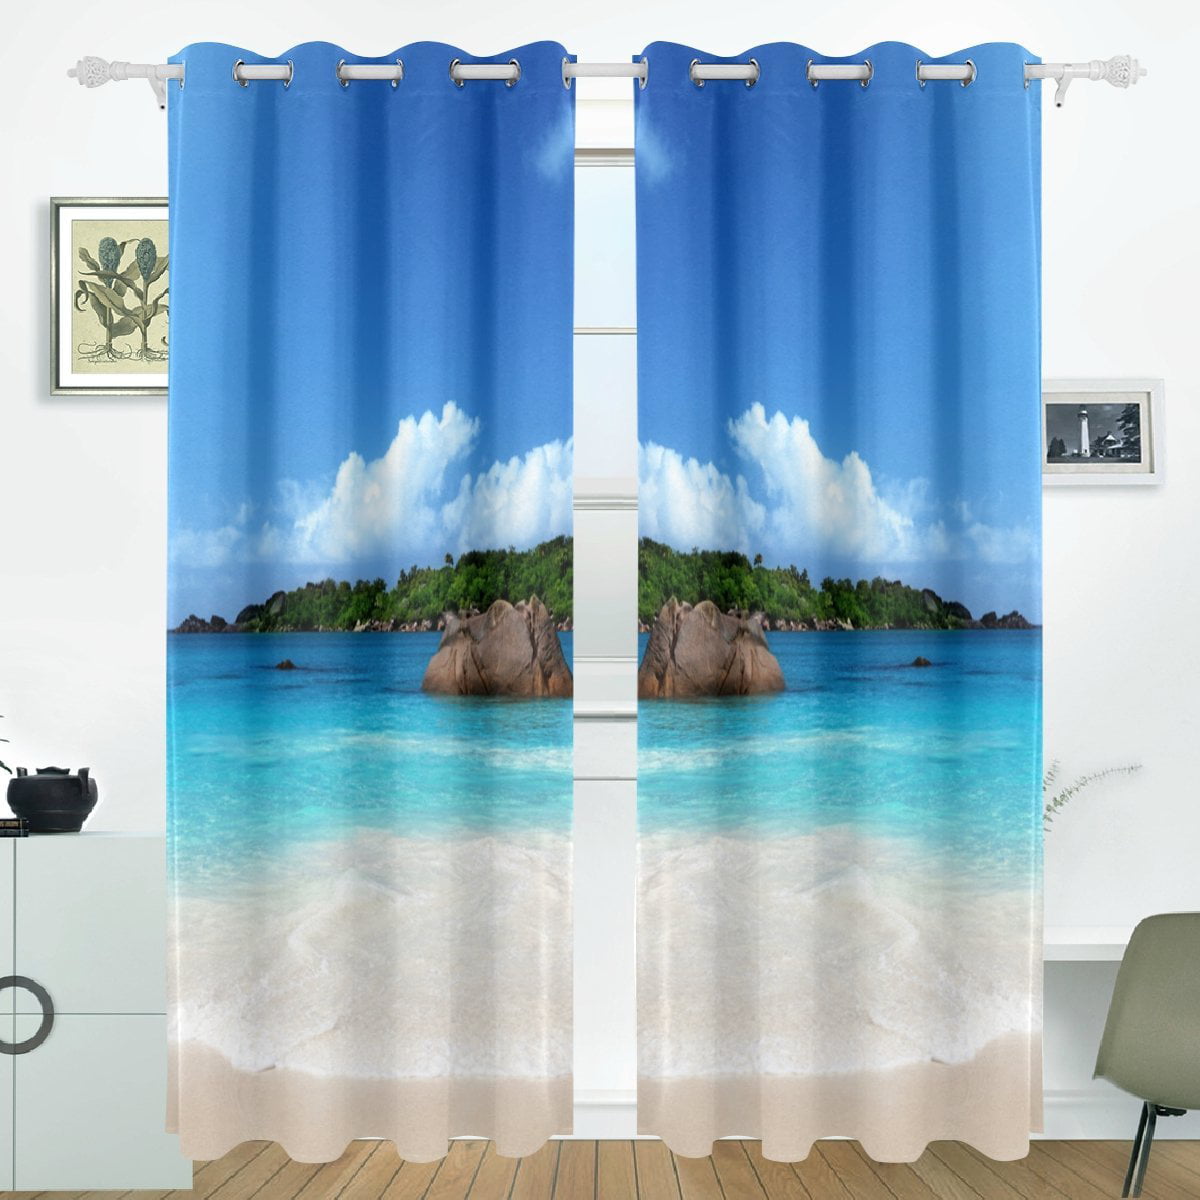 3D Blockout 2 Panel Set Window Curtain-Ocean Beach Blue Sky Cloud Fabric Drapes 